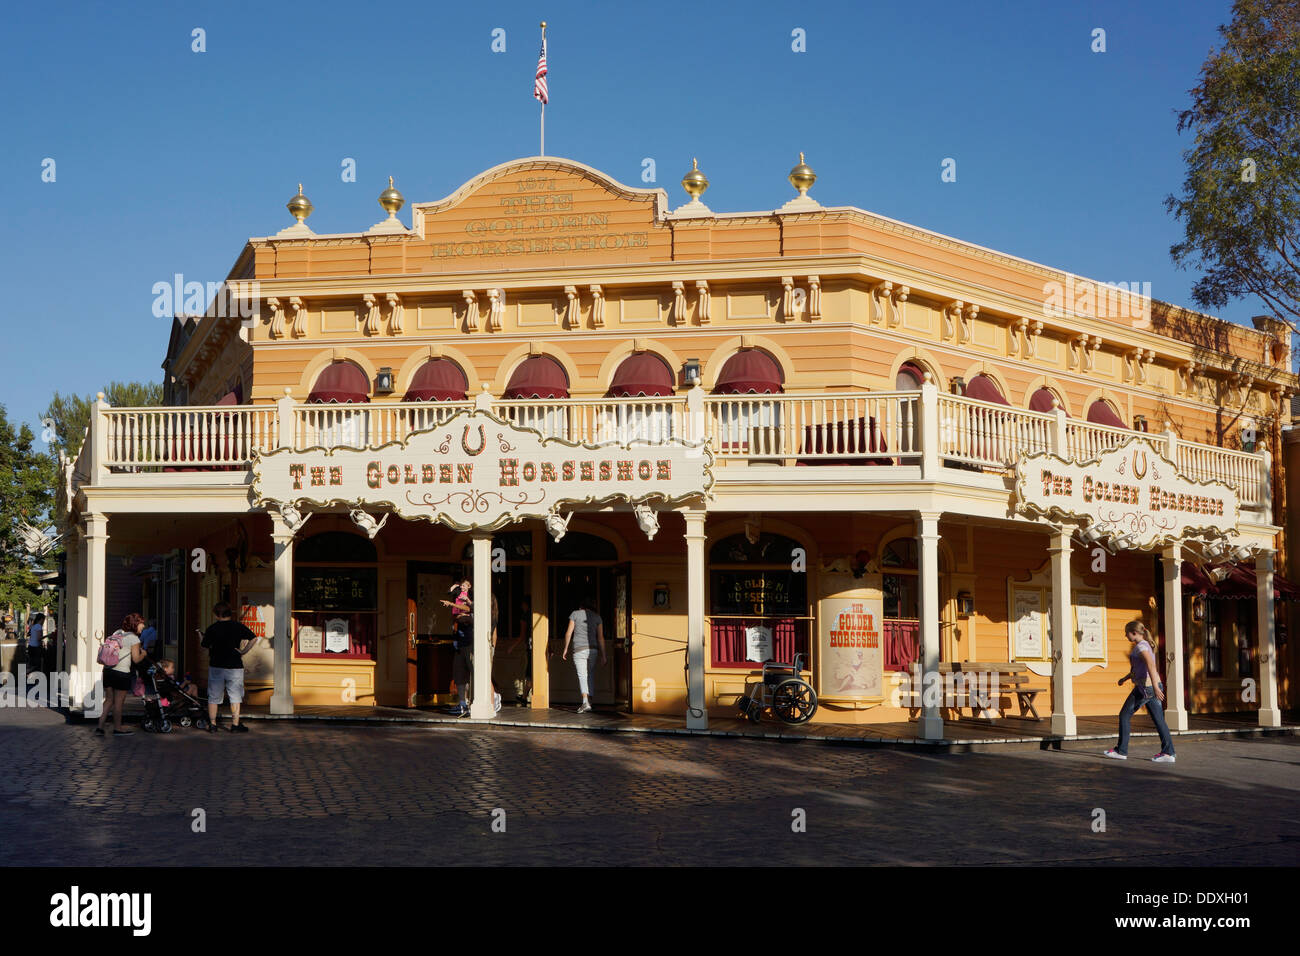 Le restaurant du Golden Horseshoe, Disneyland, Frontierland, Anaheim, Californie Banque D'Images